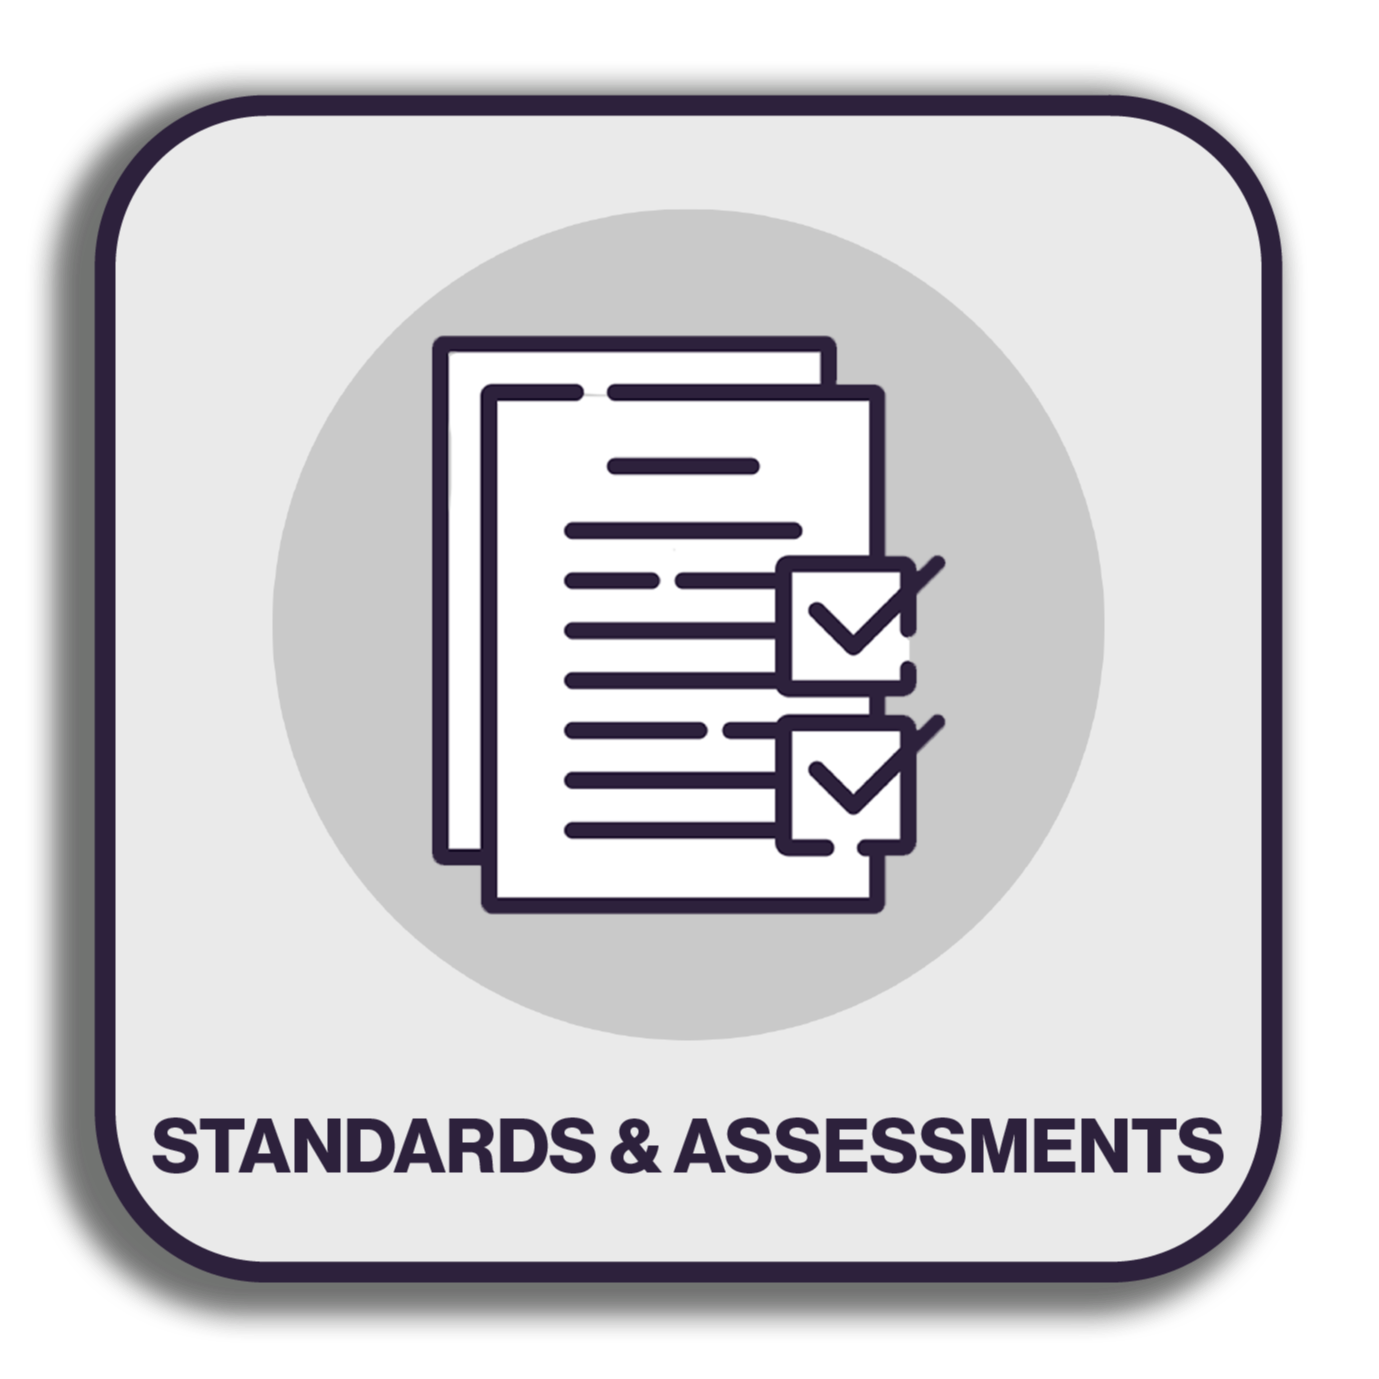 Standards & Assessments Button